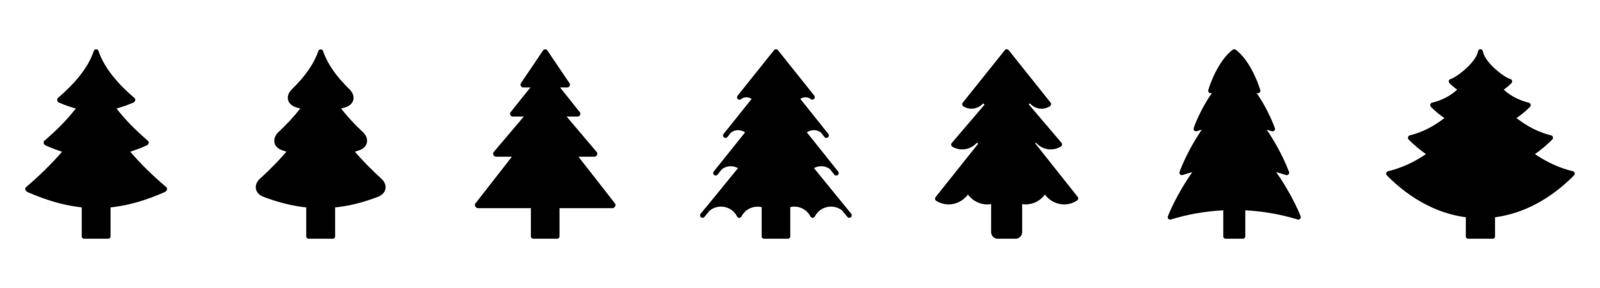 Christmas tree icon. Set of black christmas tree icons on white background. Vector illustration